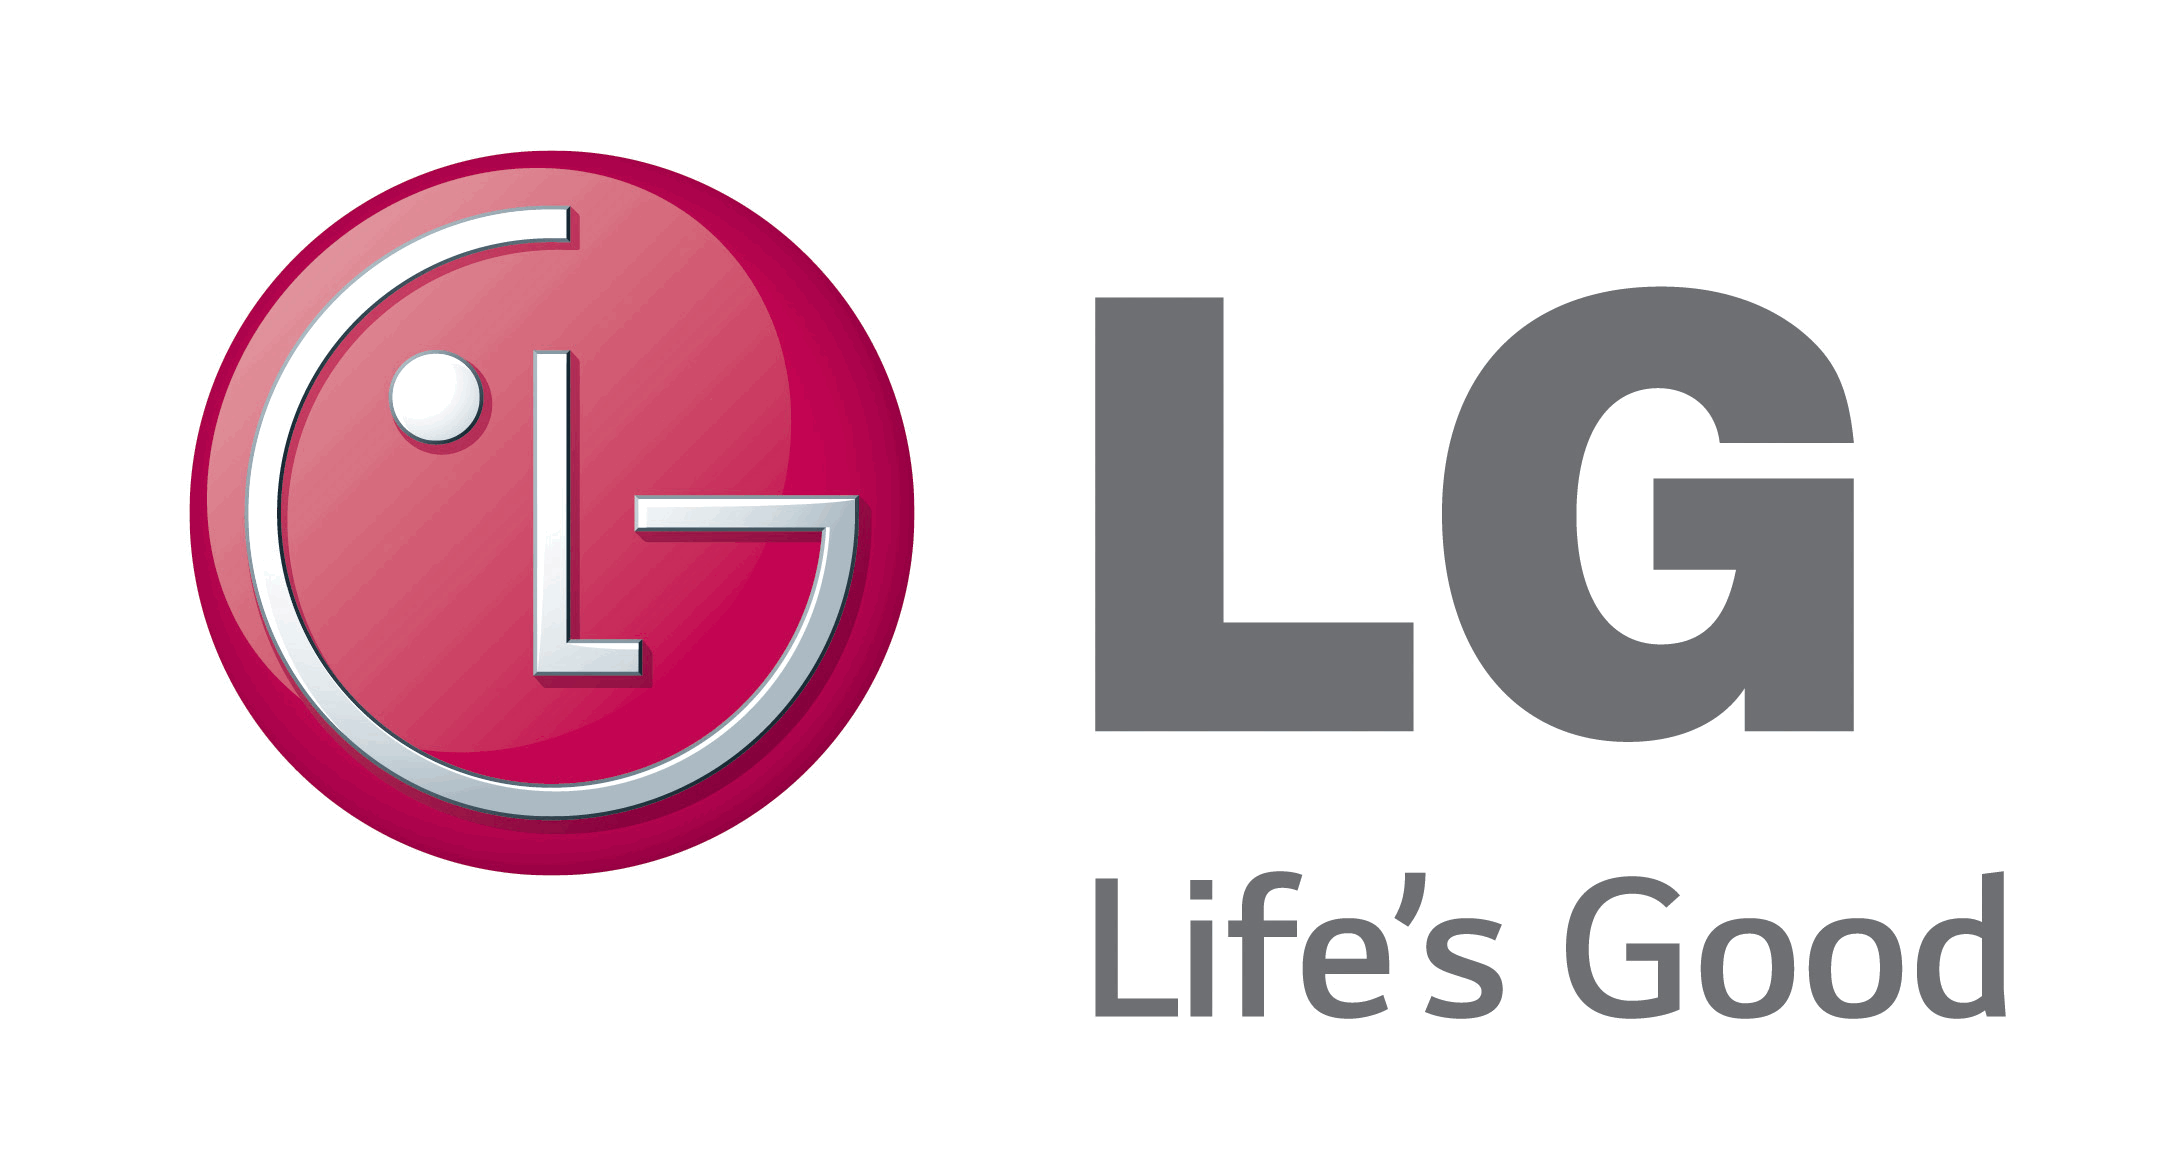 LG NEXUS 4 bateria sem carga